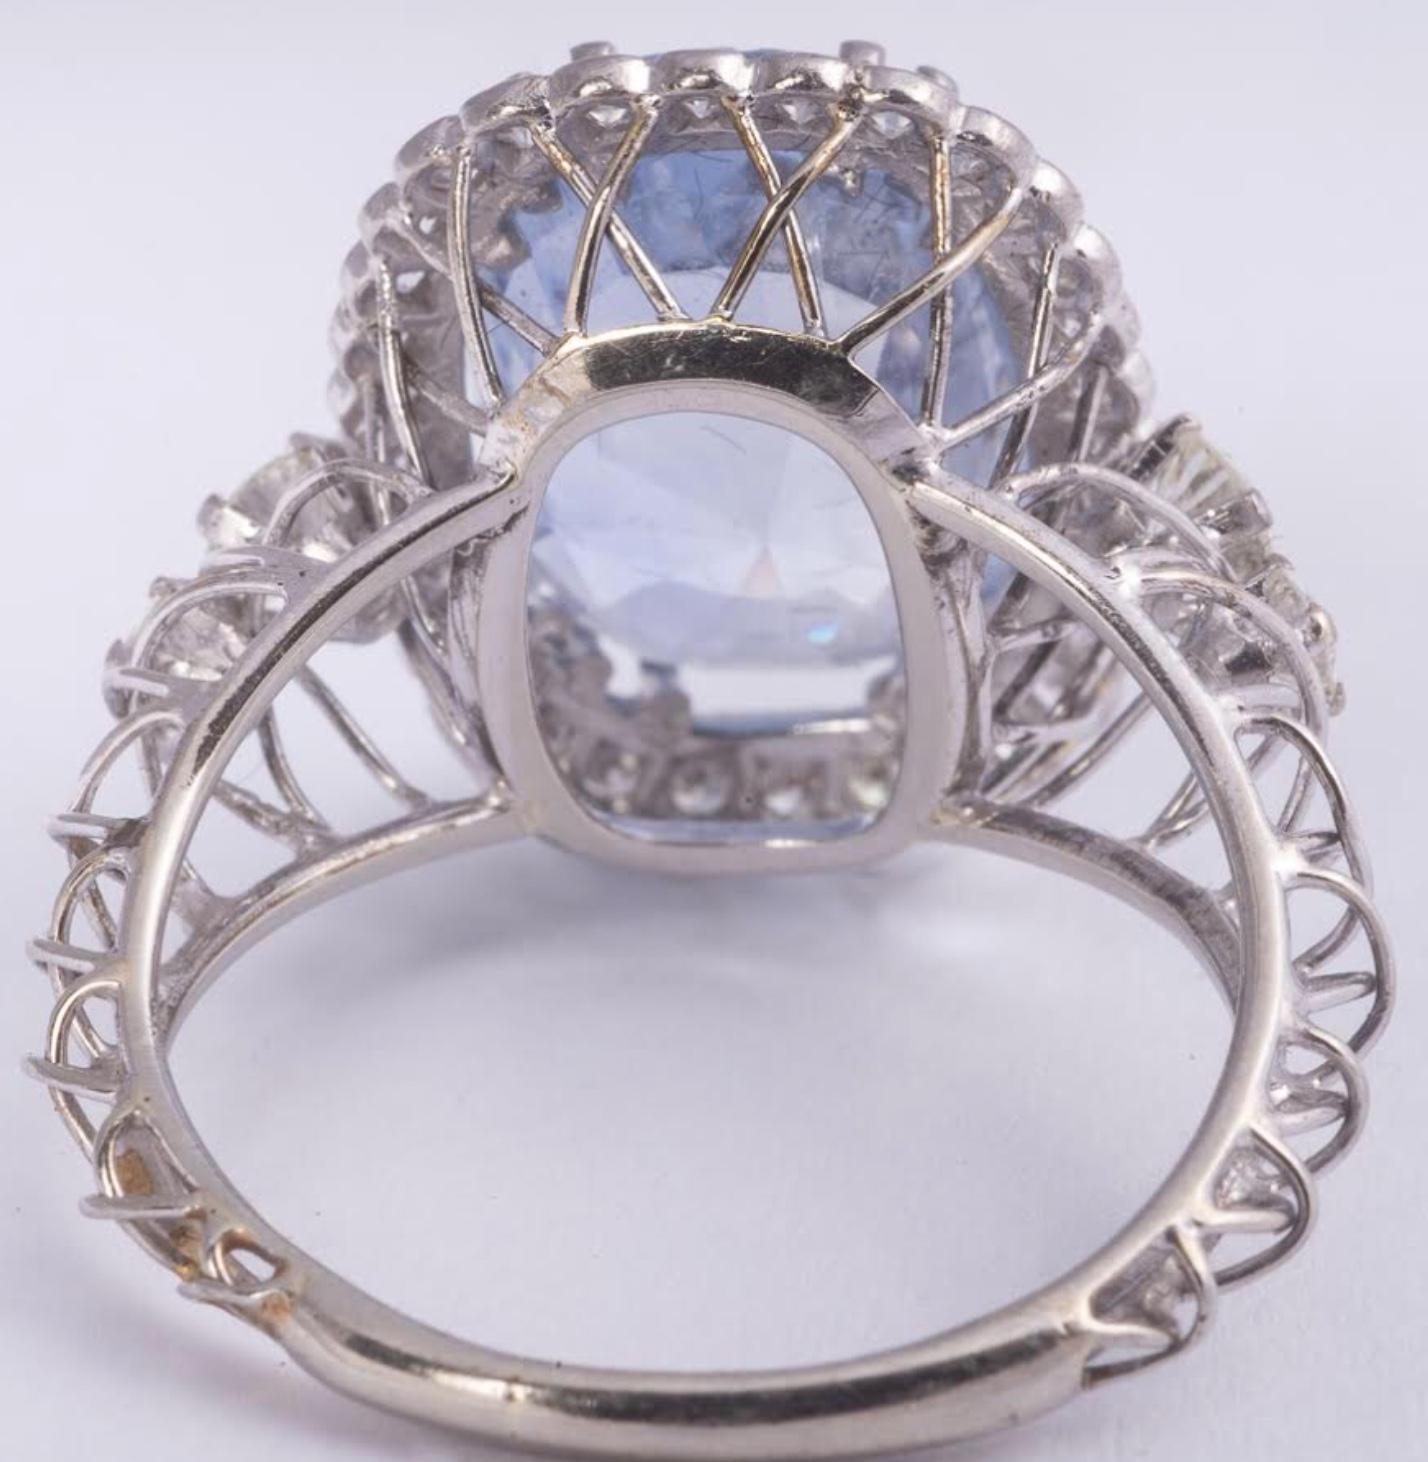 8 carat sapphire ring